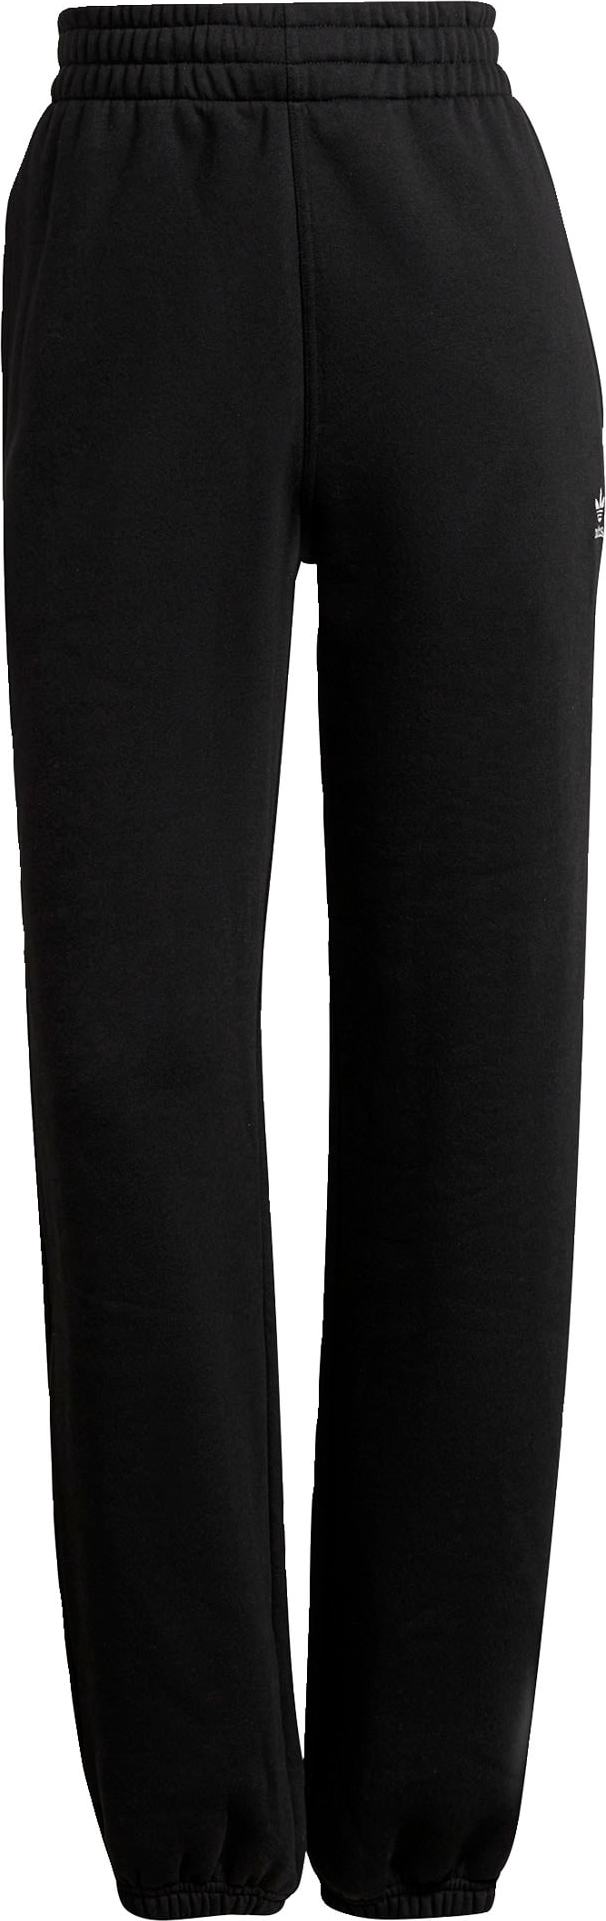 ADIDAS ORIGINALS Sportovní kalhoty 'Essentials' černá / bílá